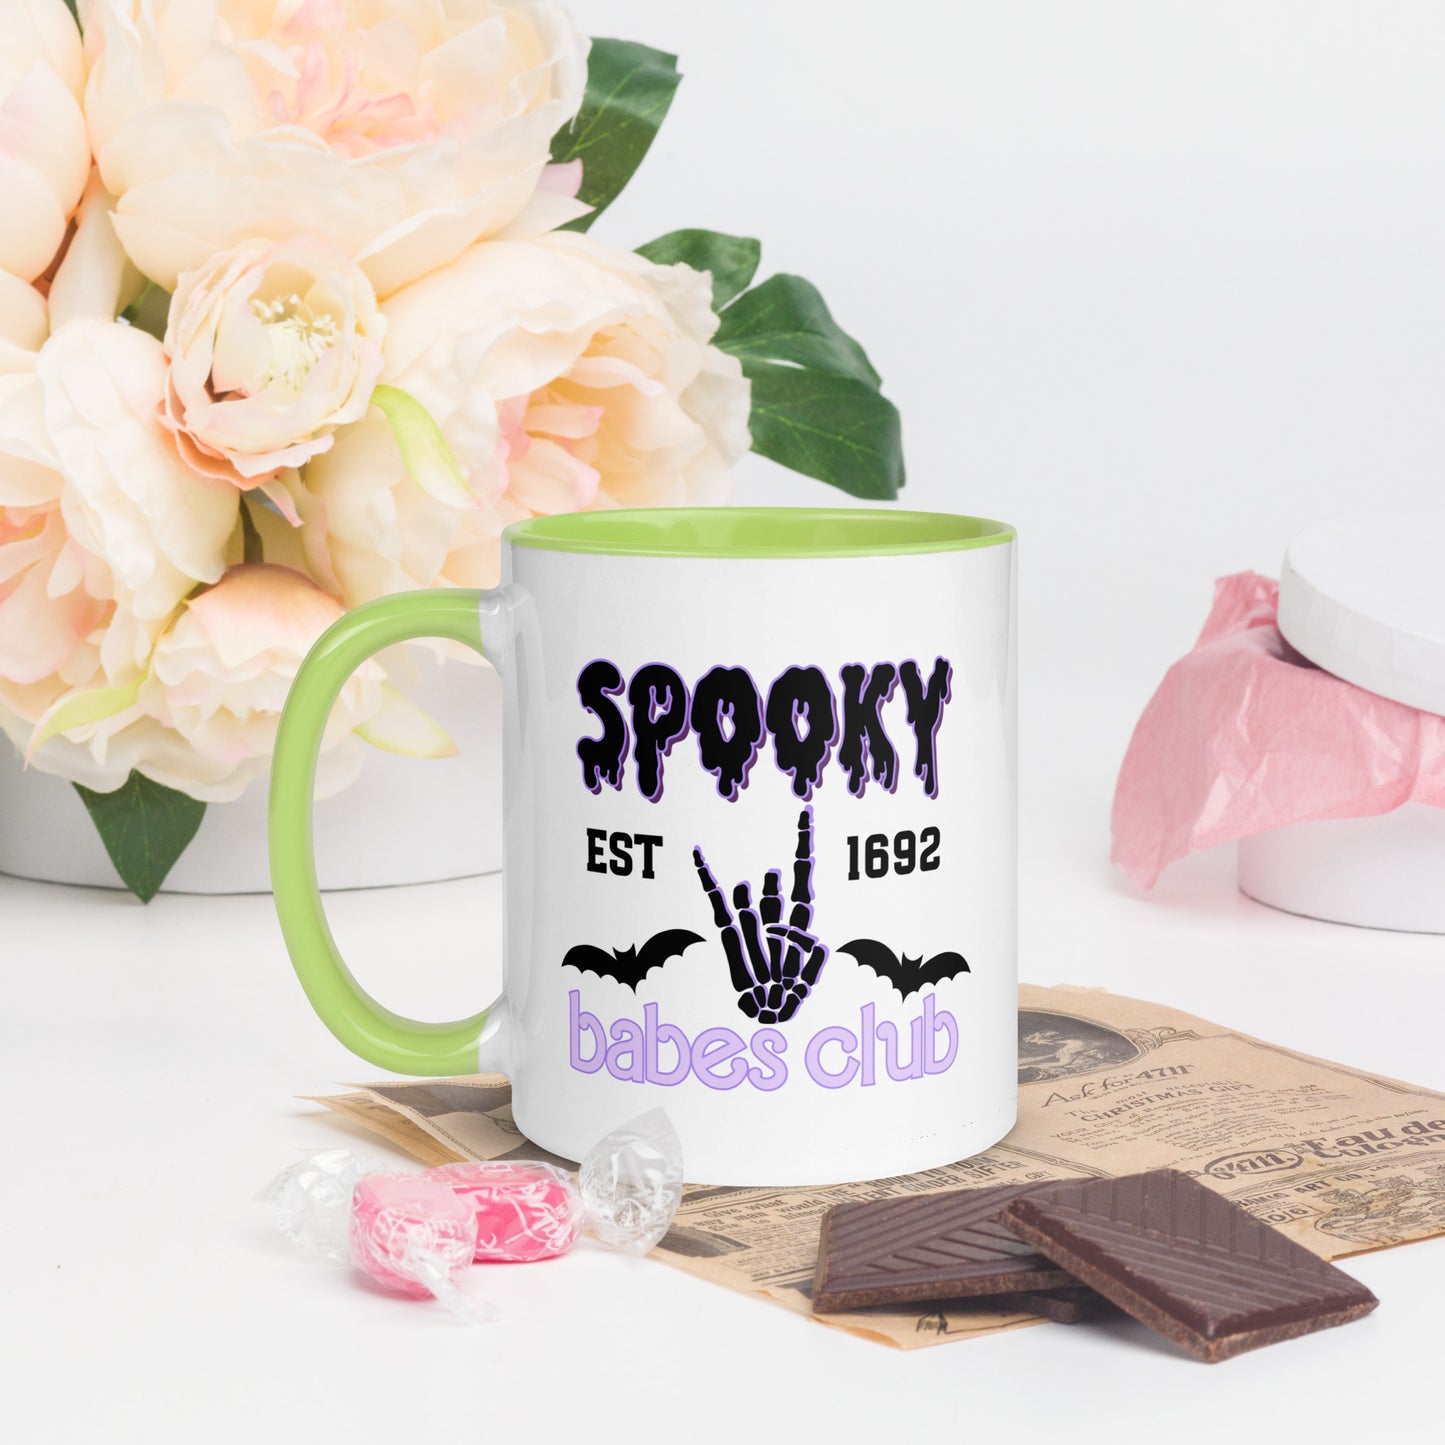 Spooky Babe Club Mug with Color Inside